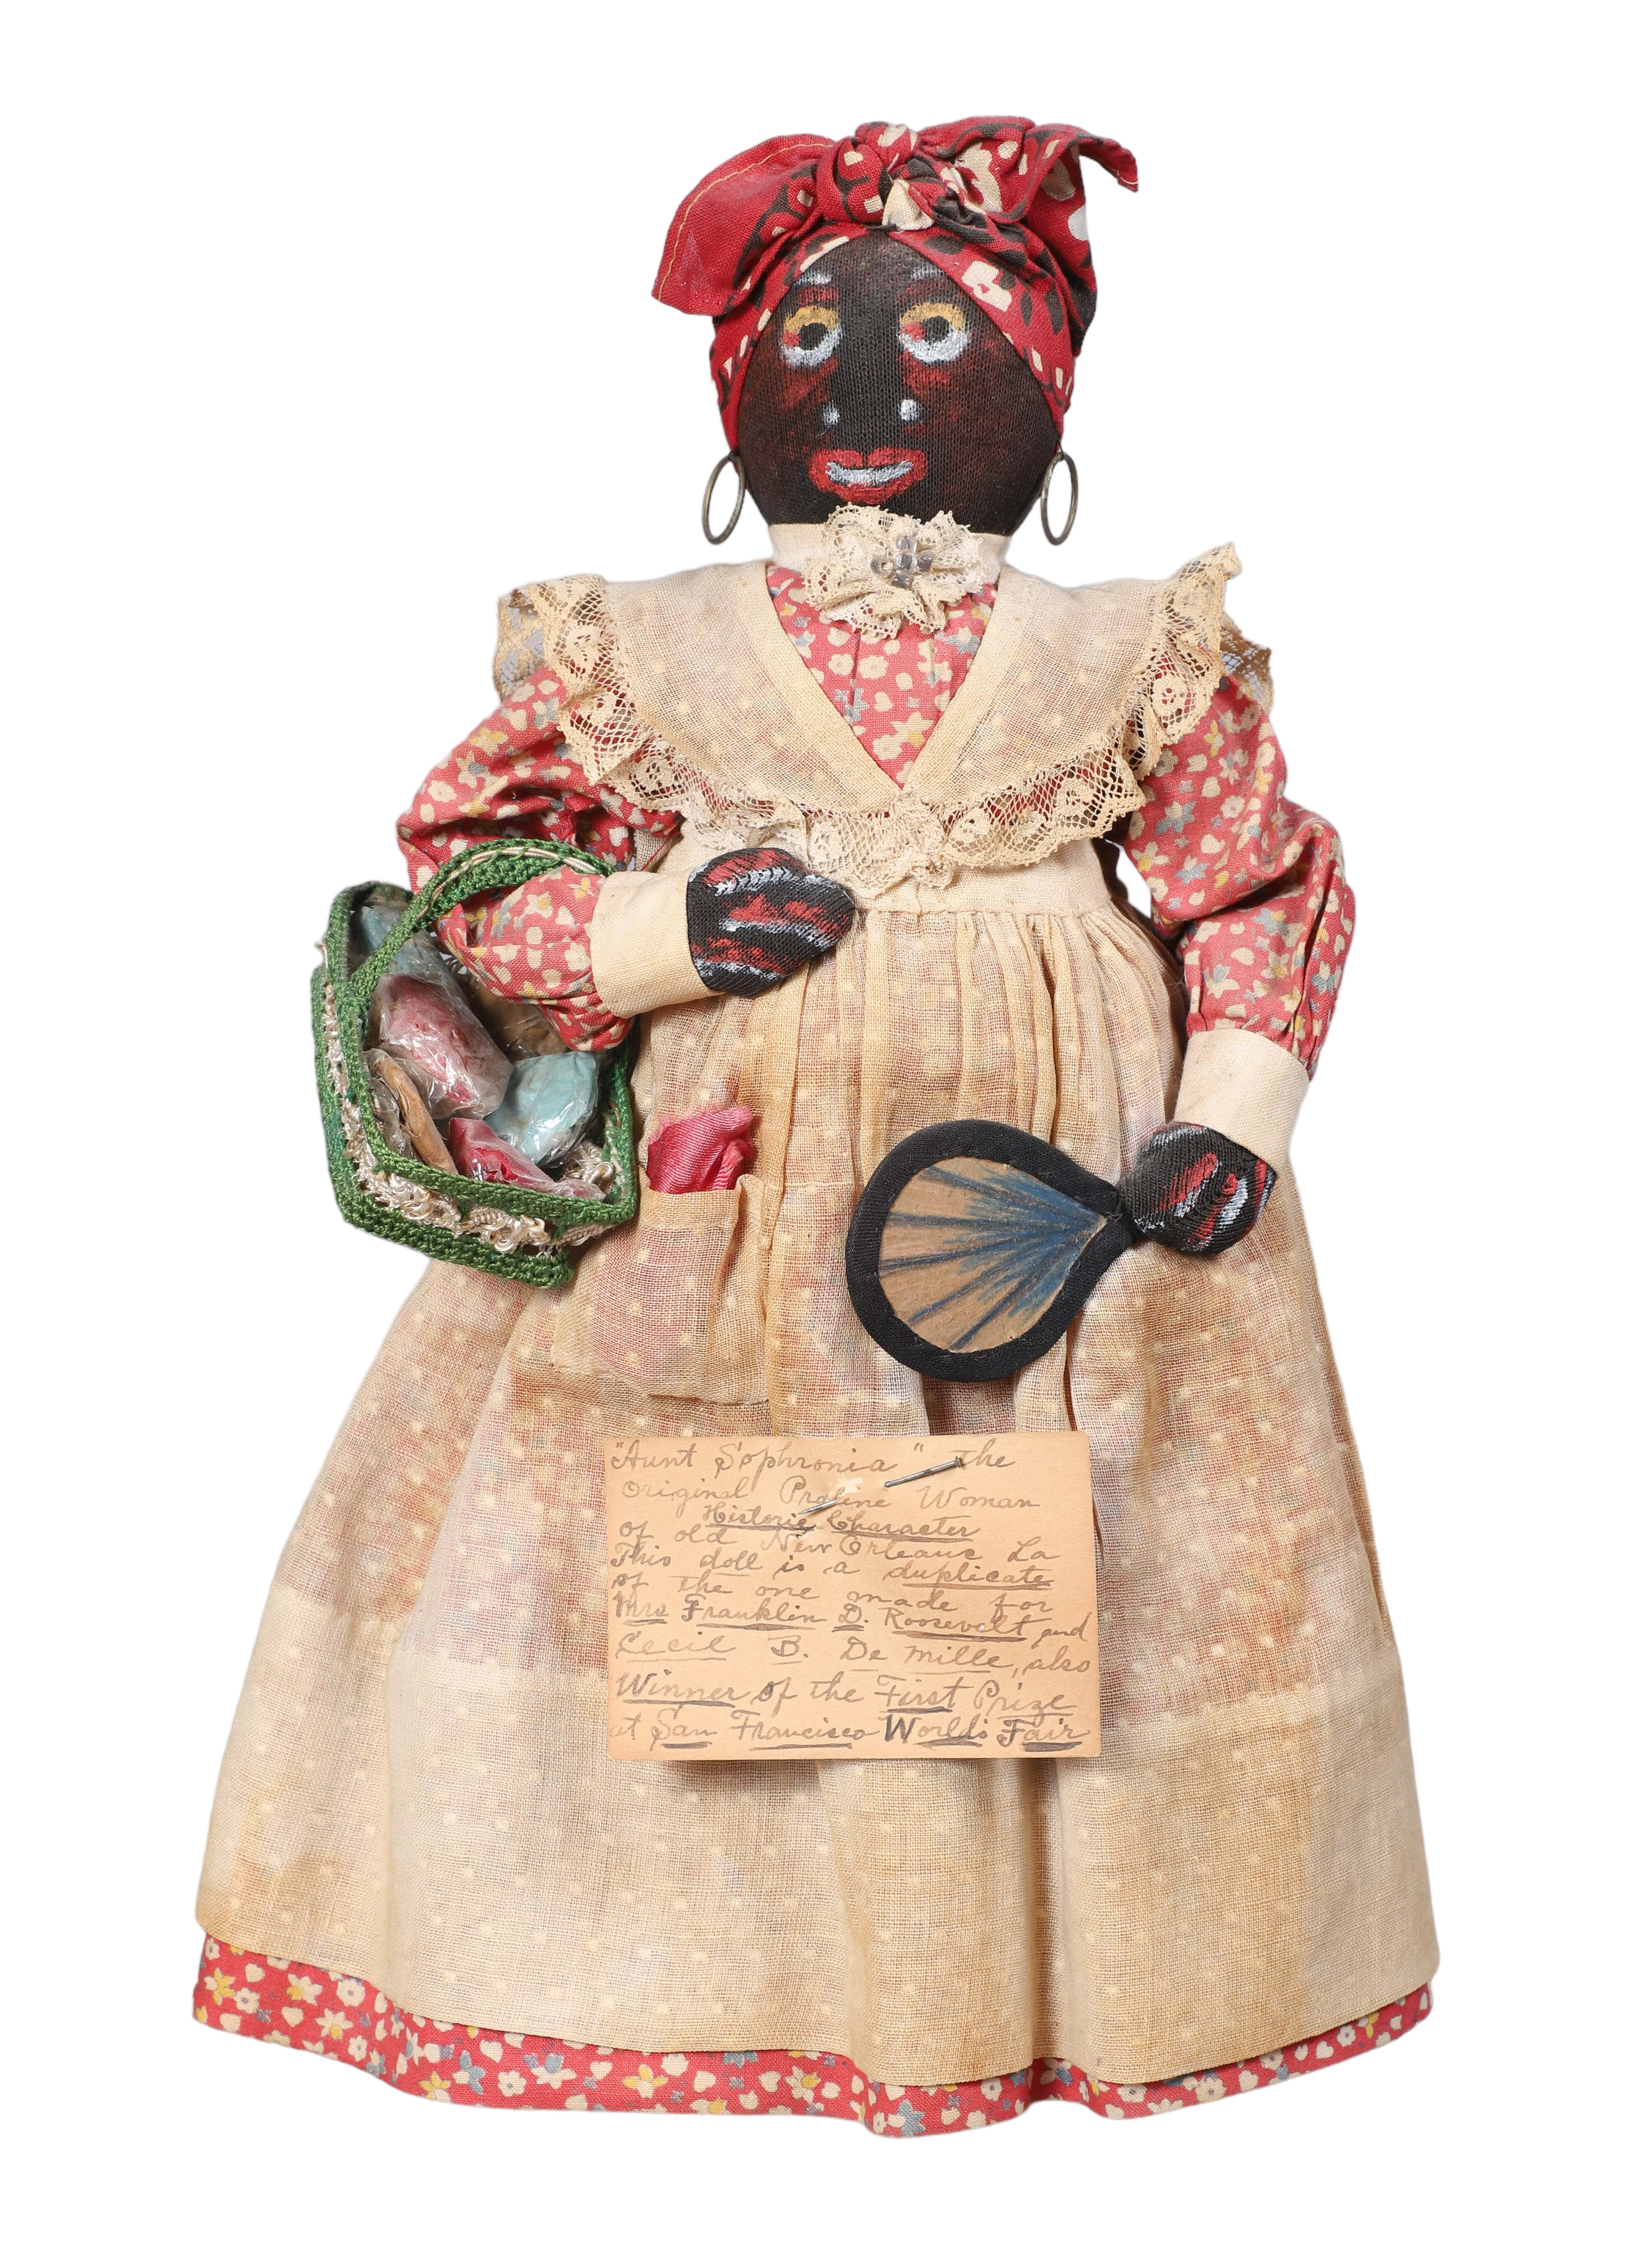 Black Americana cloth doll in 2e20d5